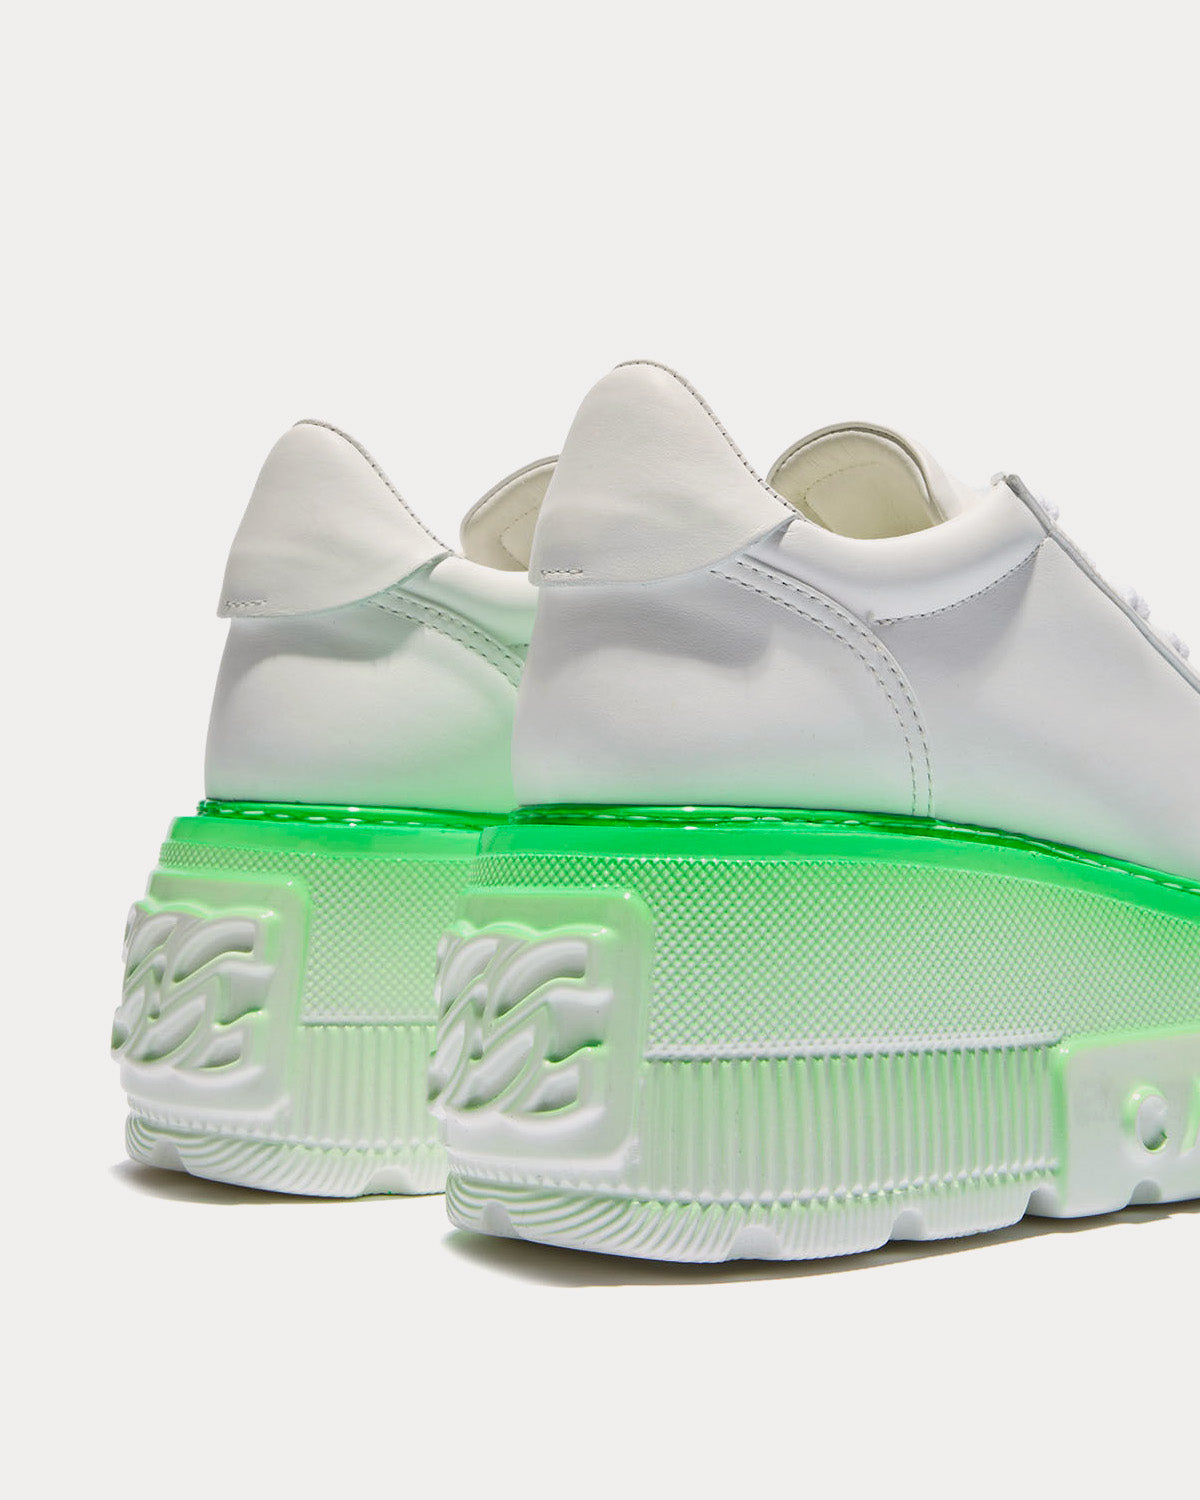 Casadei - Nexus Fluo White / Green Low Top Sneakers